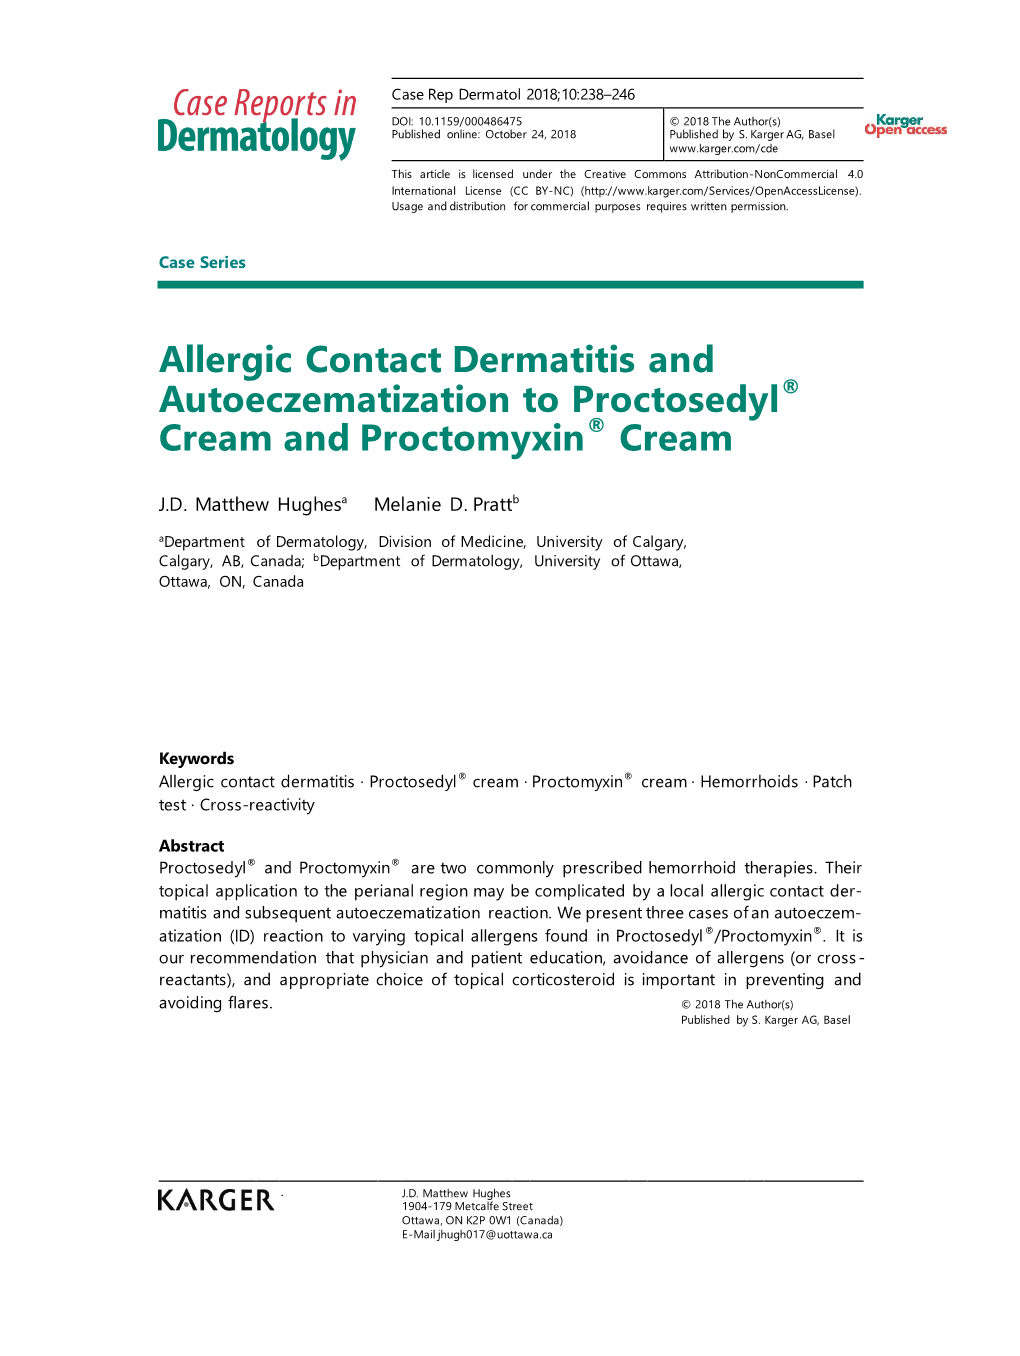 Allergic Contact Dermatitis and Autoeczematization to Proctosedyl® Cream and Proctomyxin® Cream